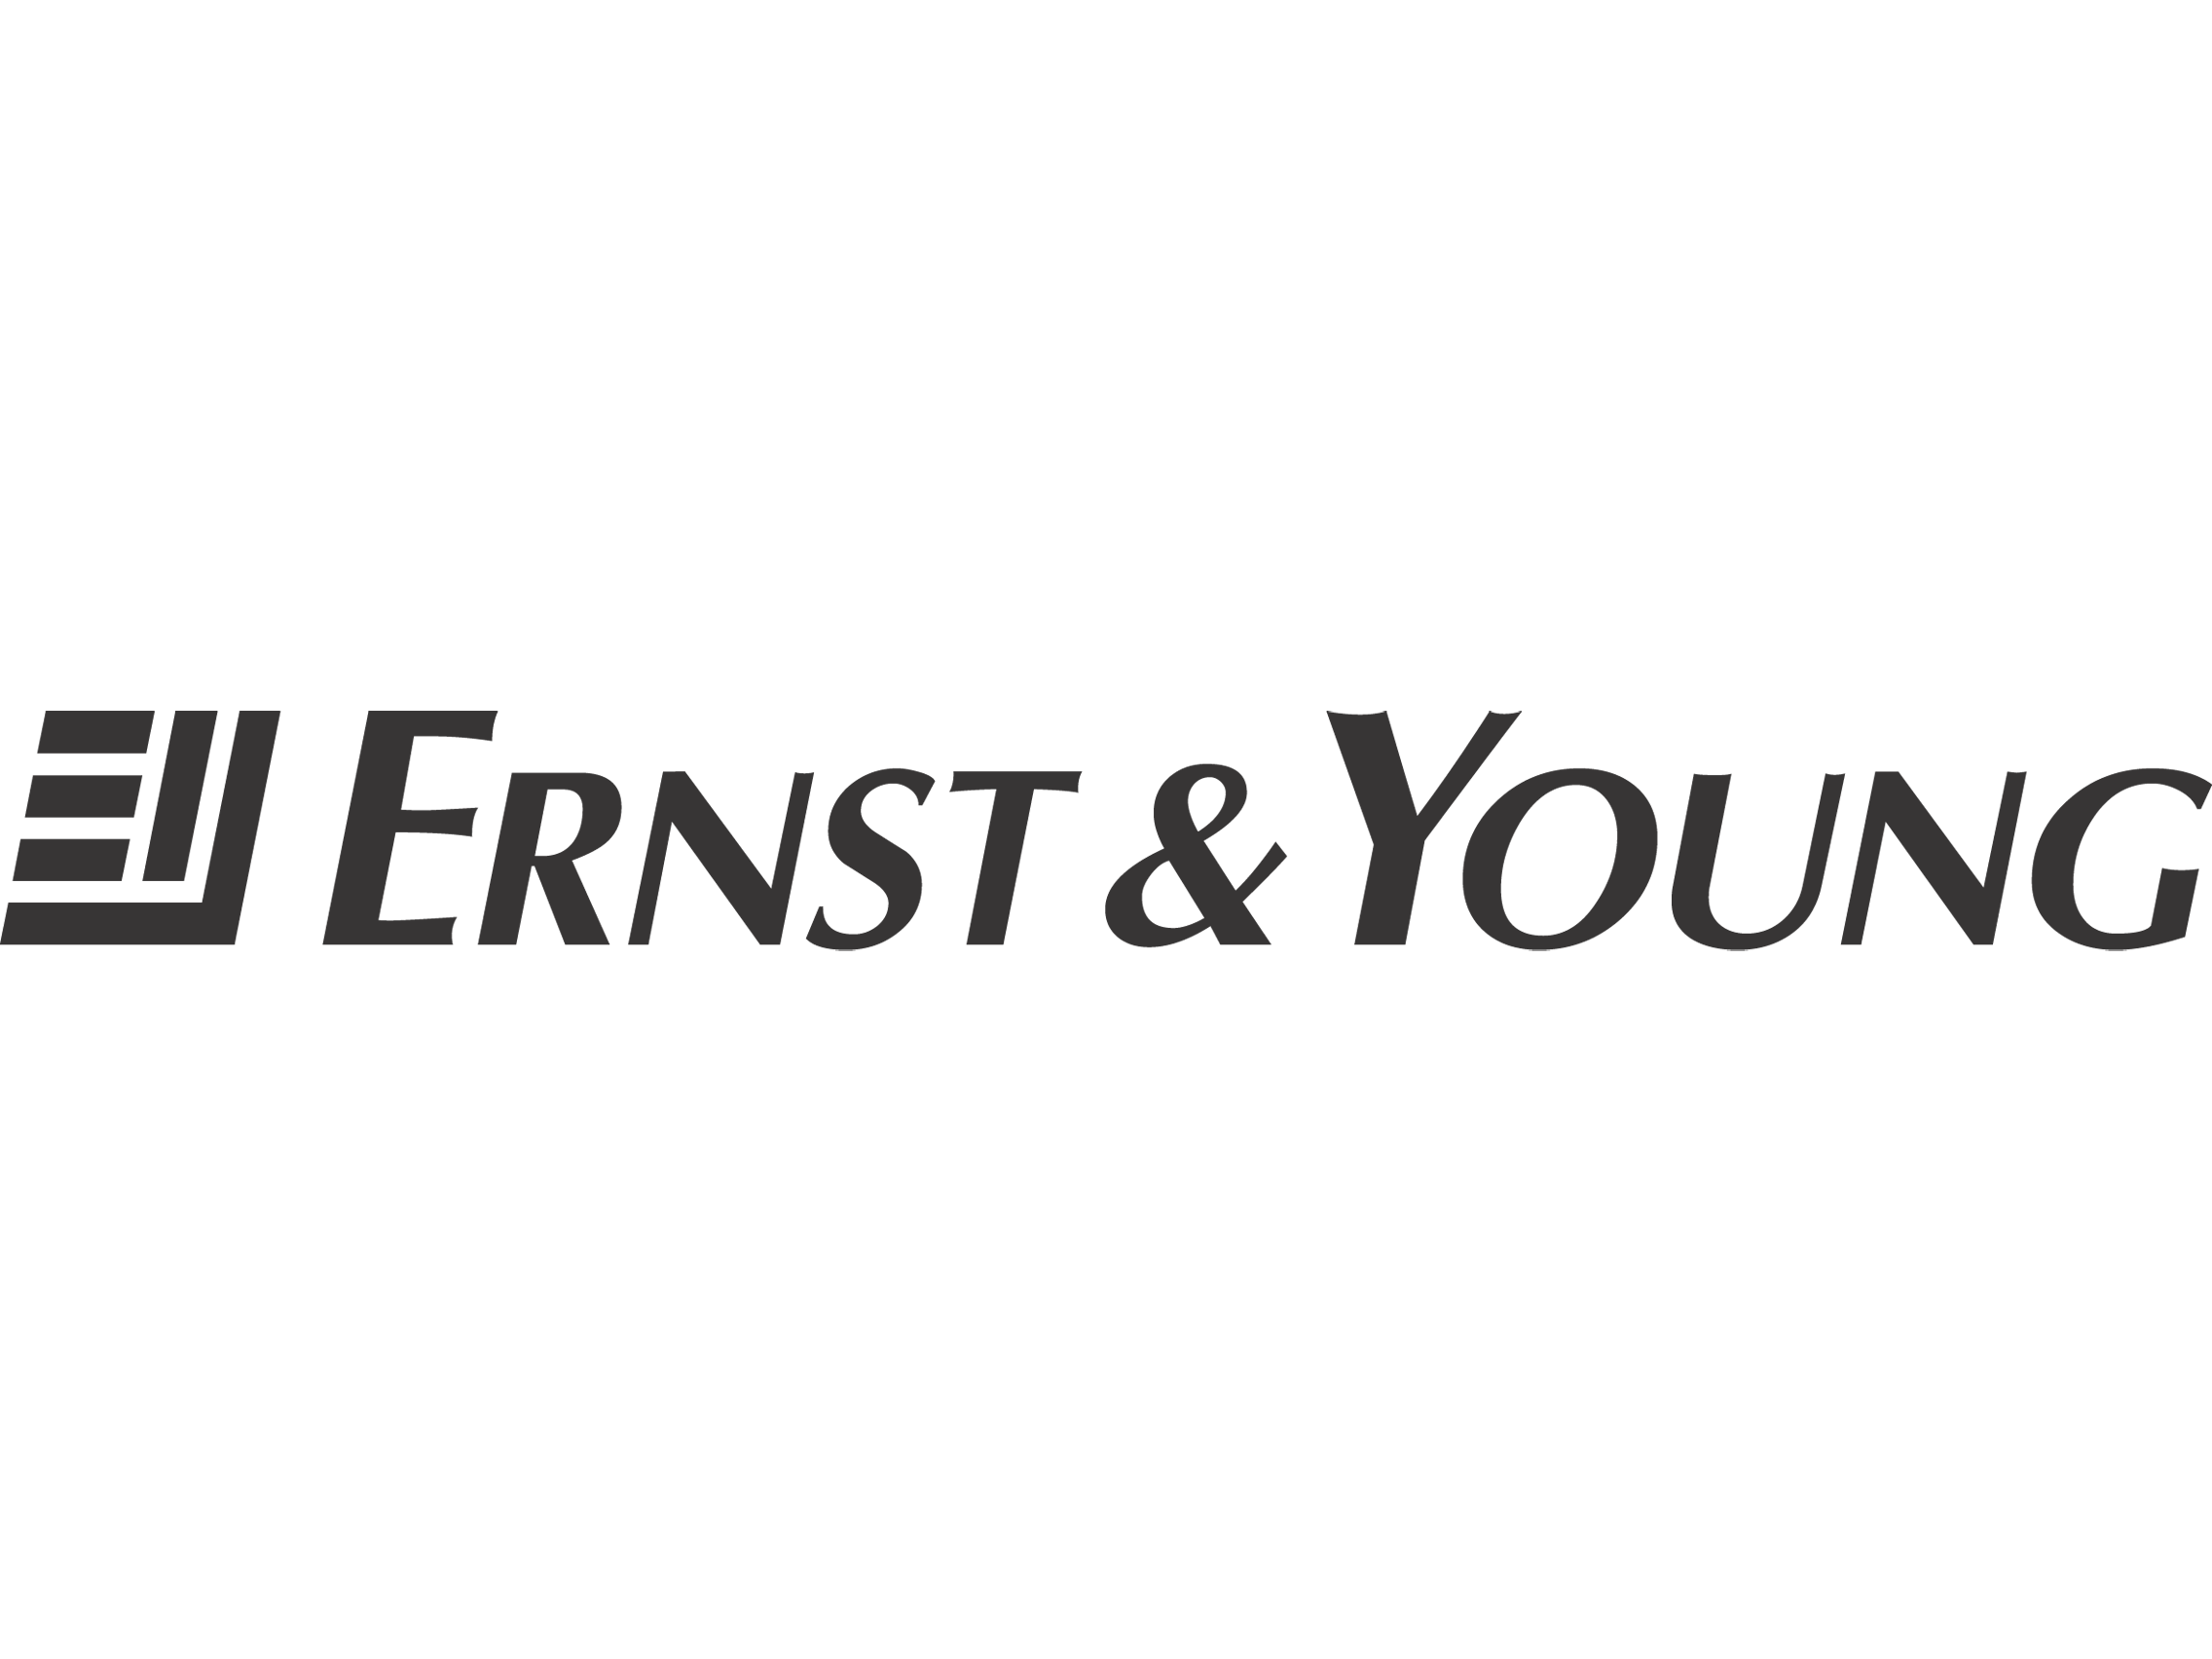 Ernst and young. Ernst and young logo. Ernst and young старый логотип. Ey фирма аудиторская.